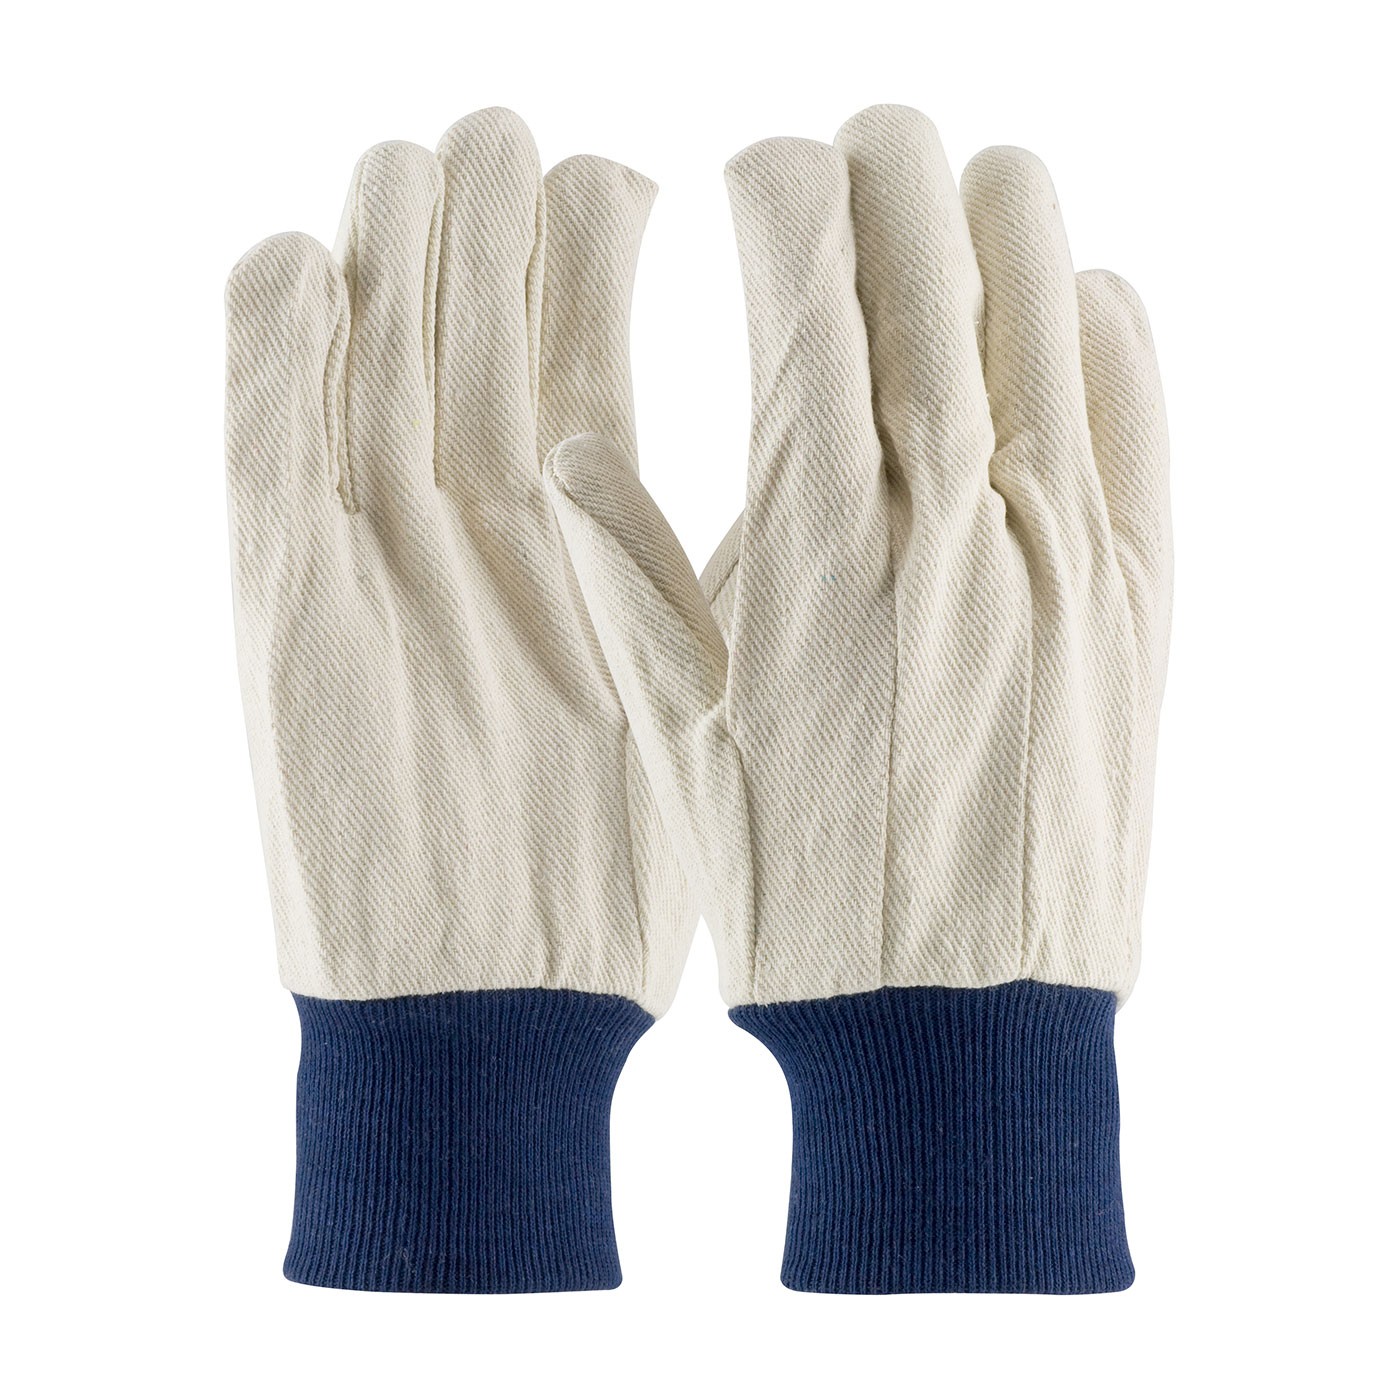 PIP® Premium Grade Cotton Canvas Single Palm Glove - Knit Wrist  (#90-908)